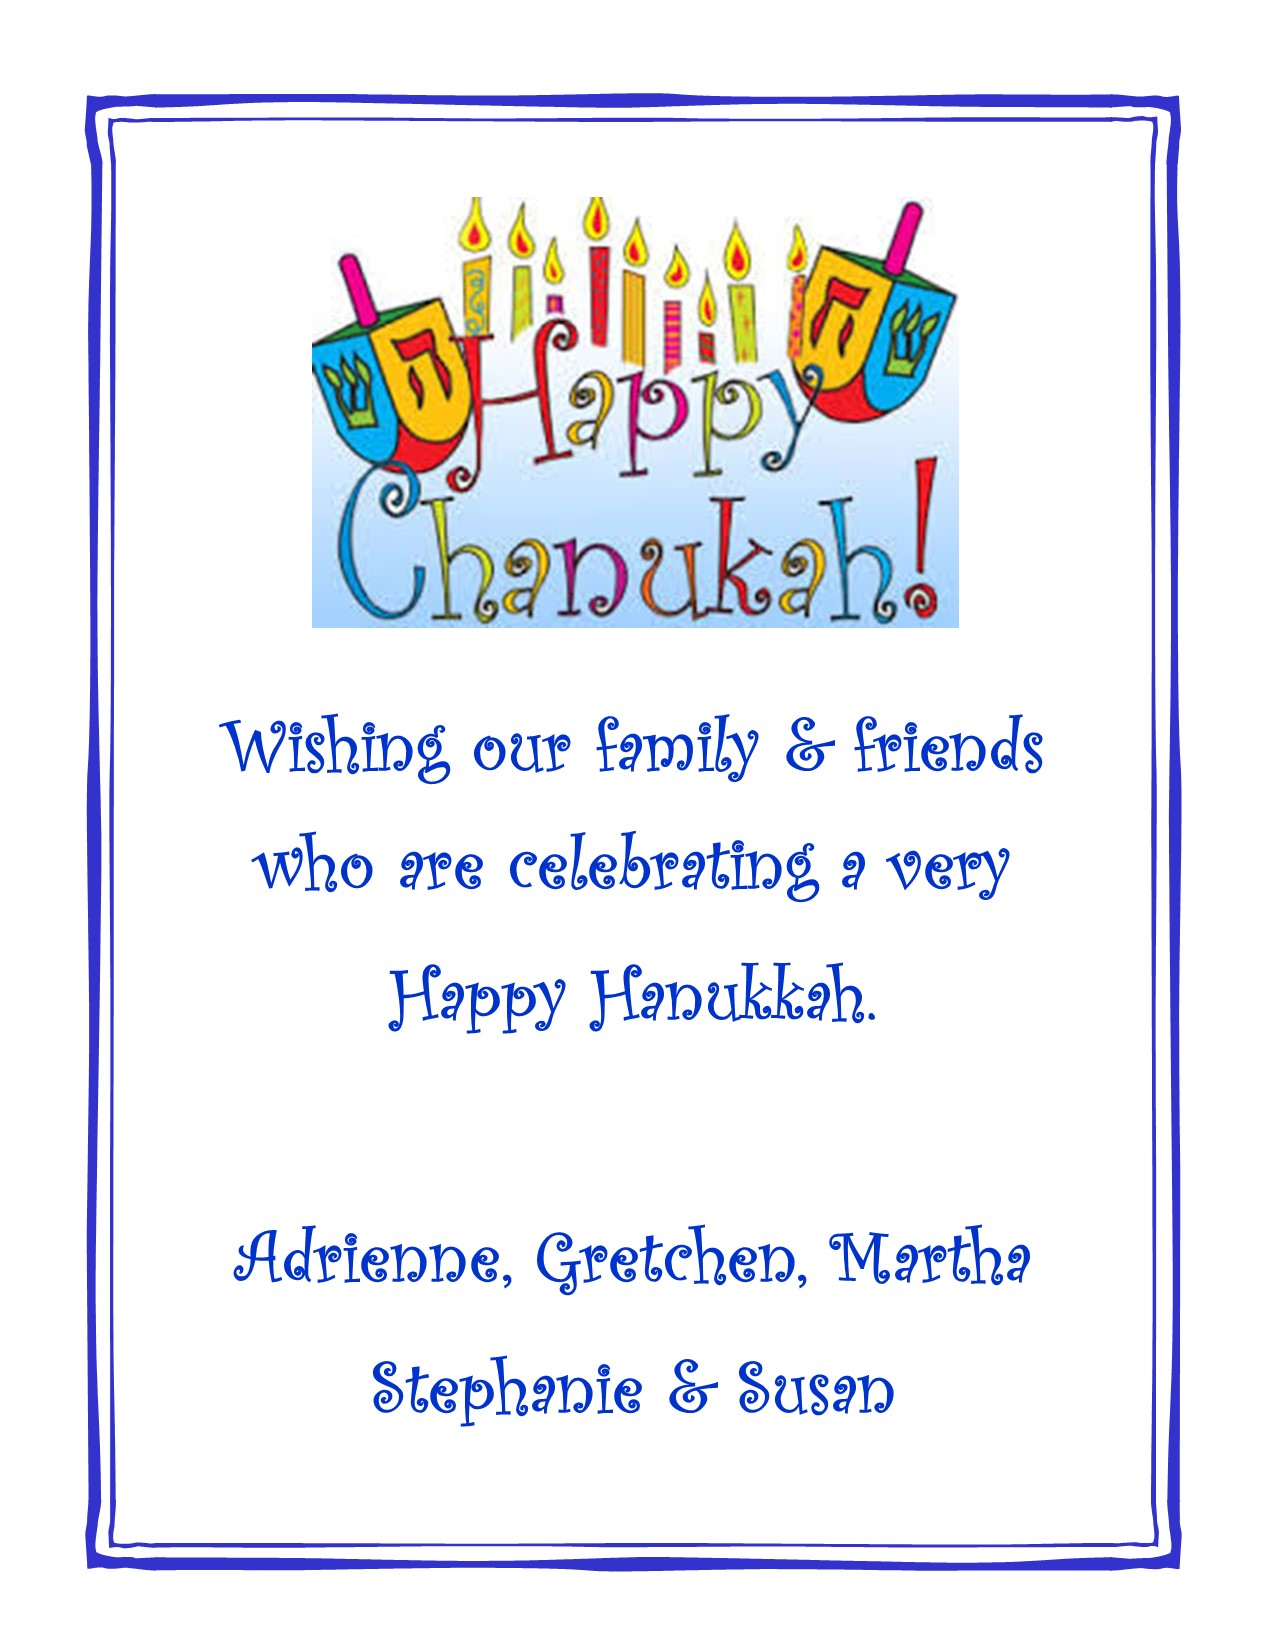 12-18-22 Happy Hanukkah